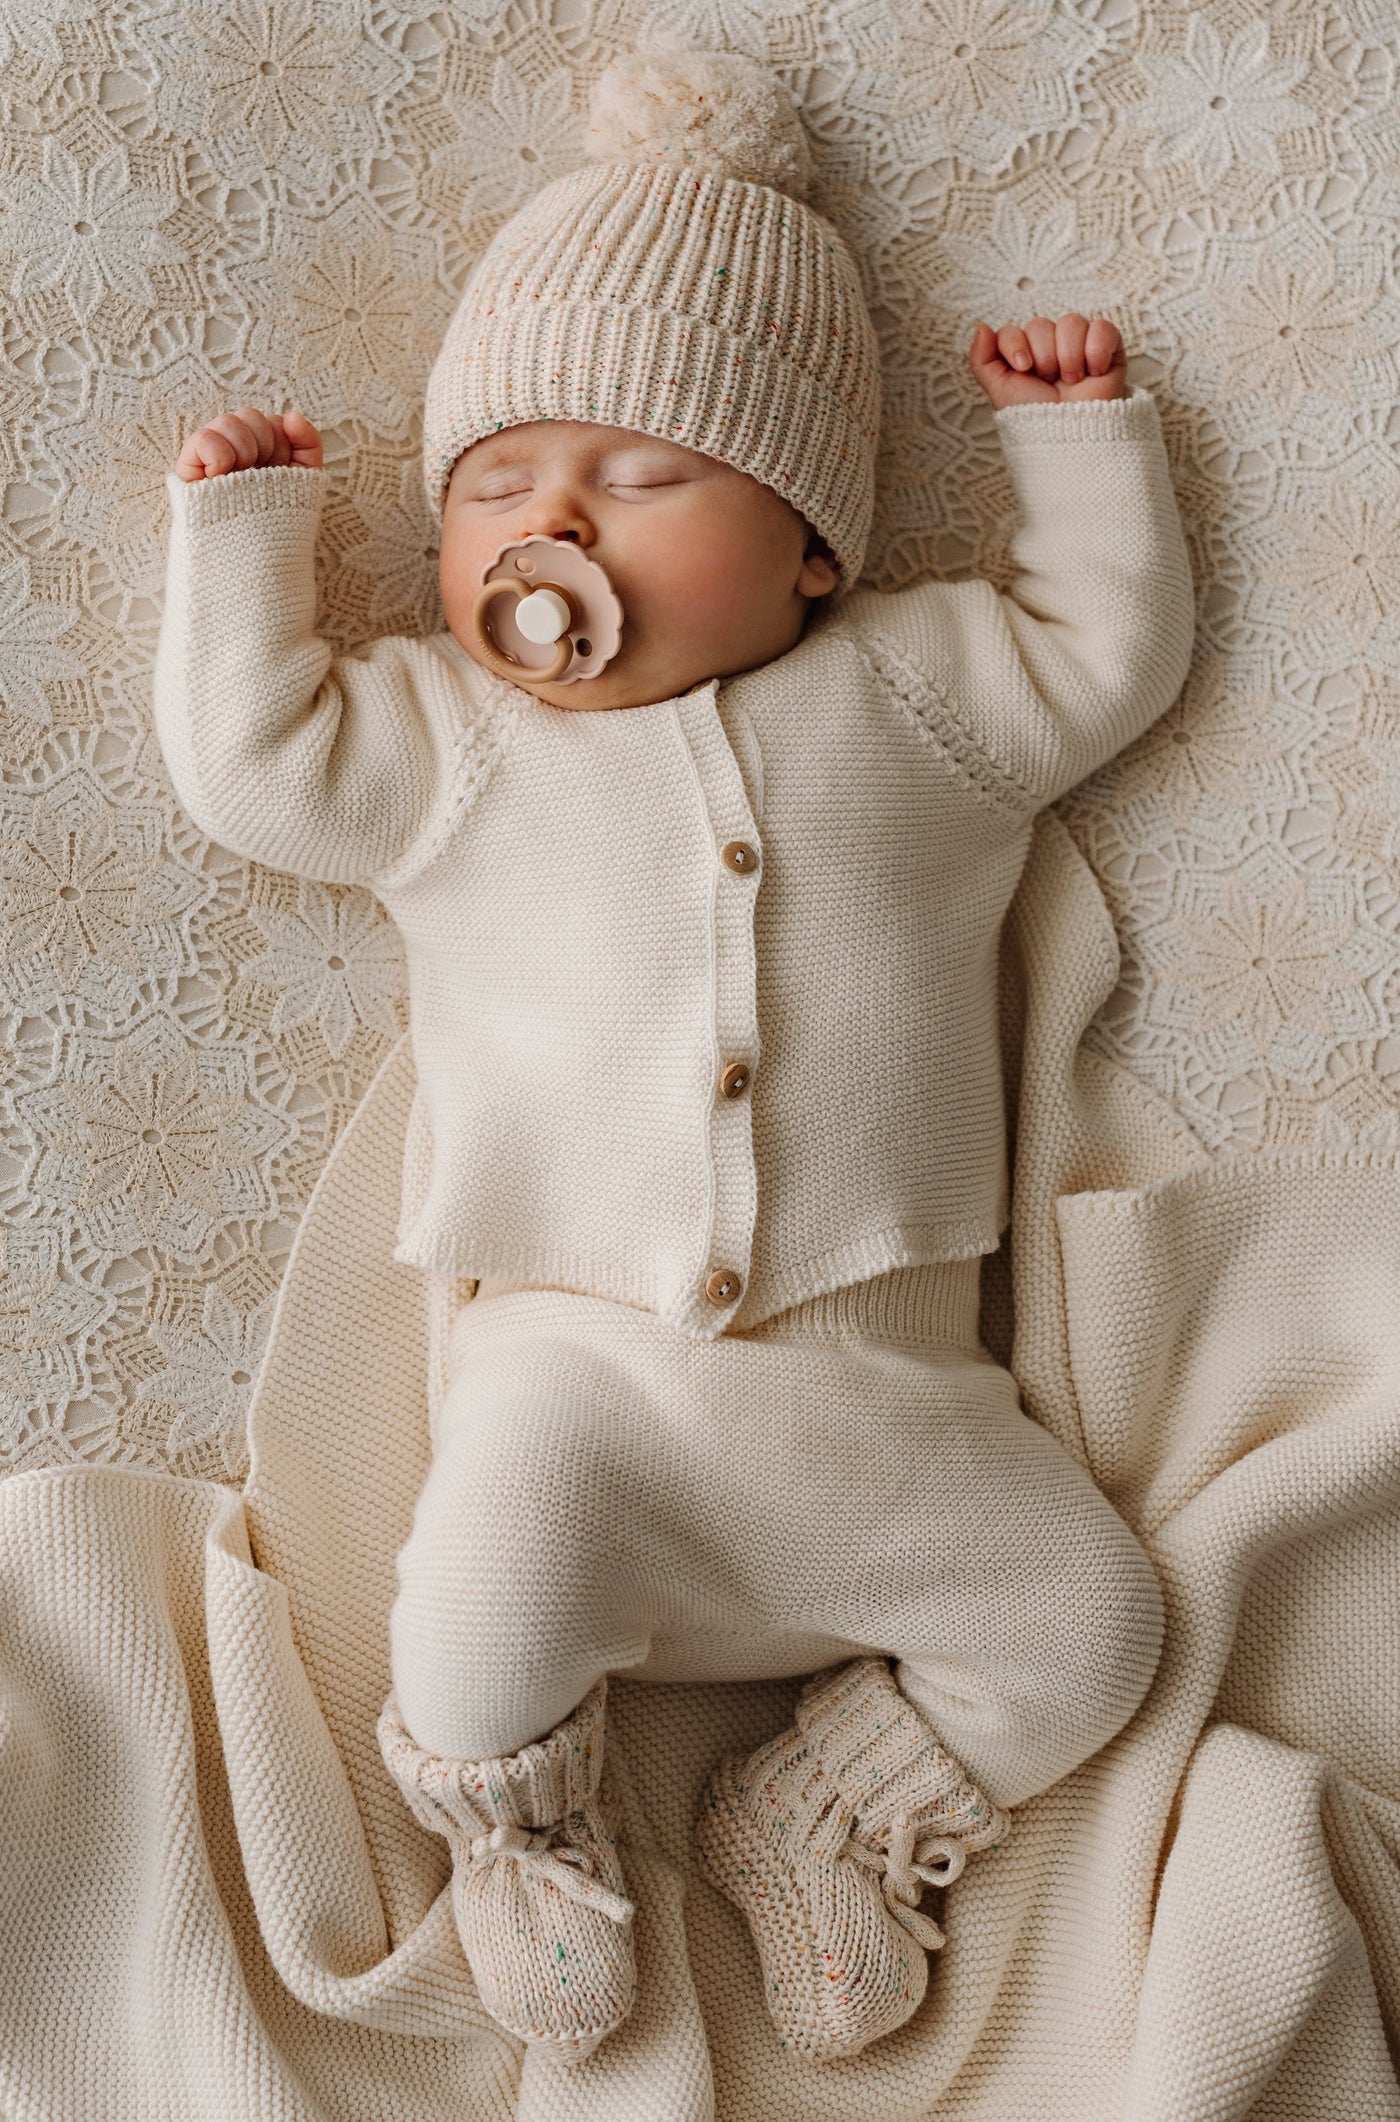 New Completino Neonato in Cotone Biologico - Baby Clothes - Baby Rainbow Shop - P.IVA 04847500230